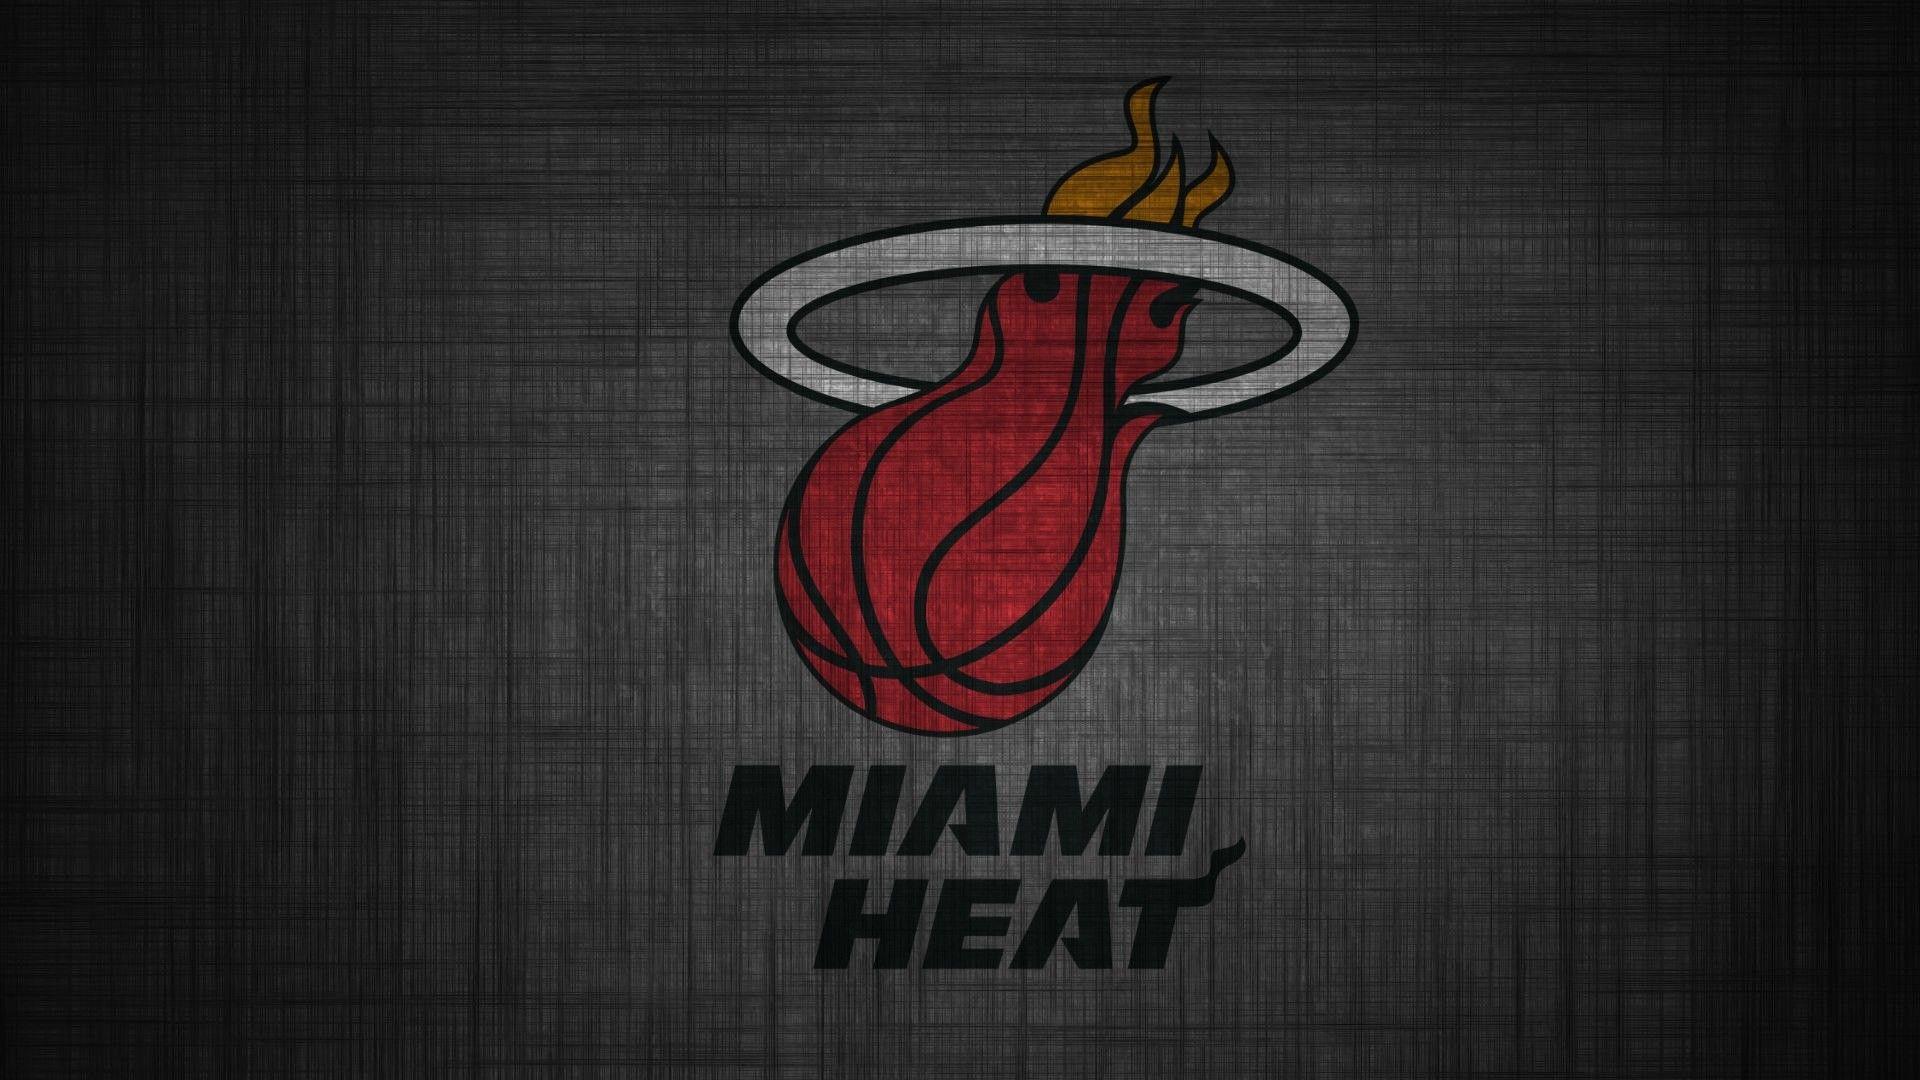 Miami Heat wallpaper.jpg